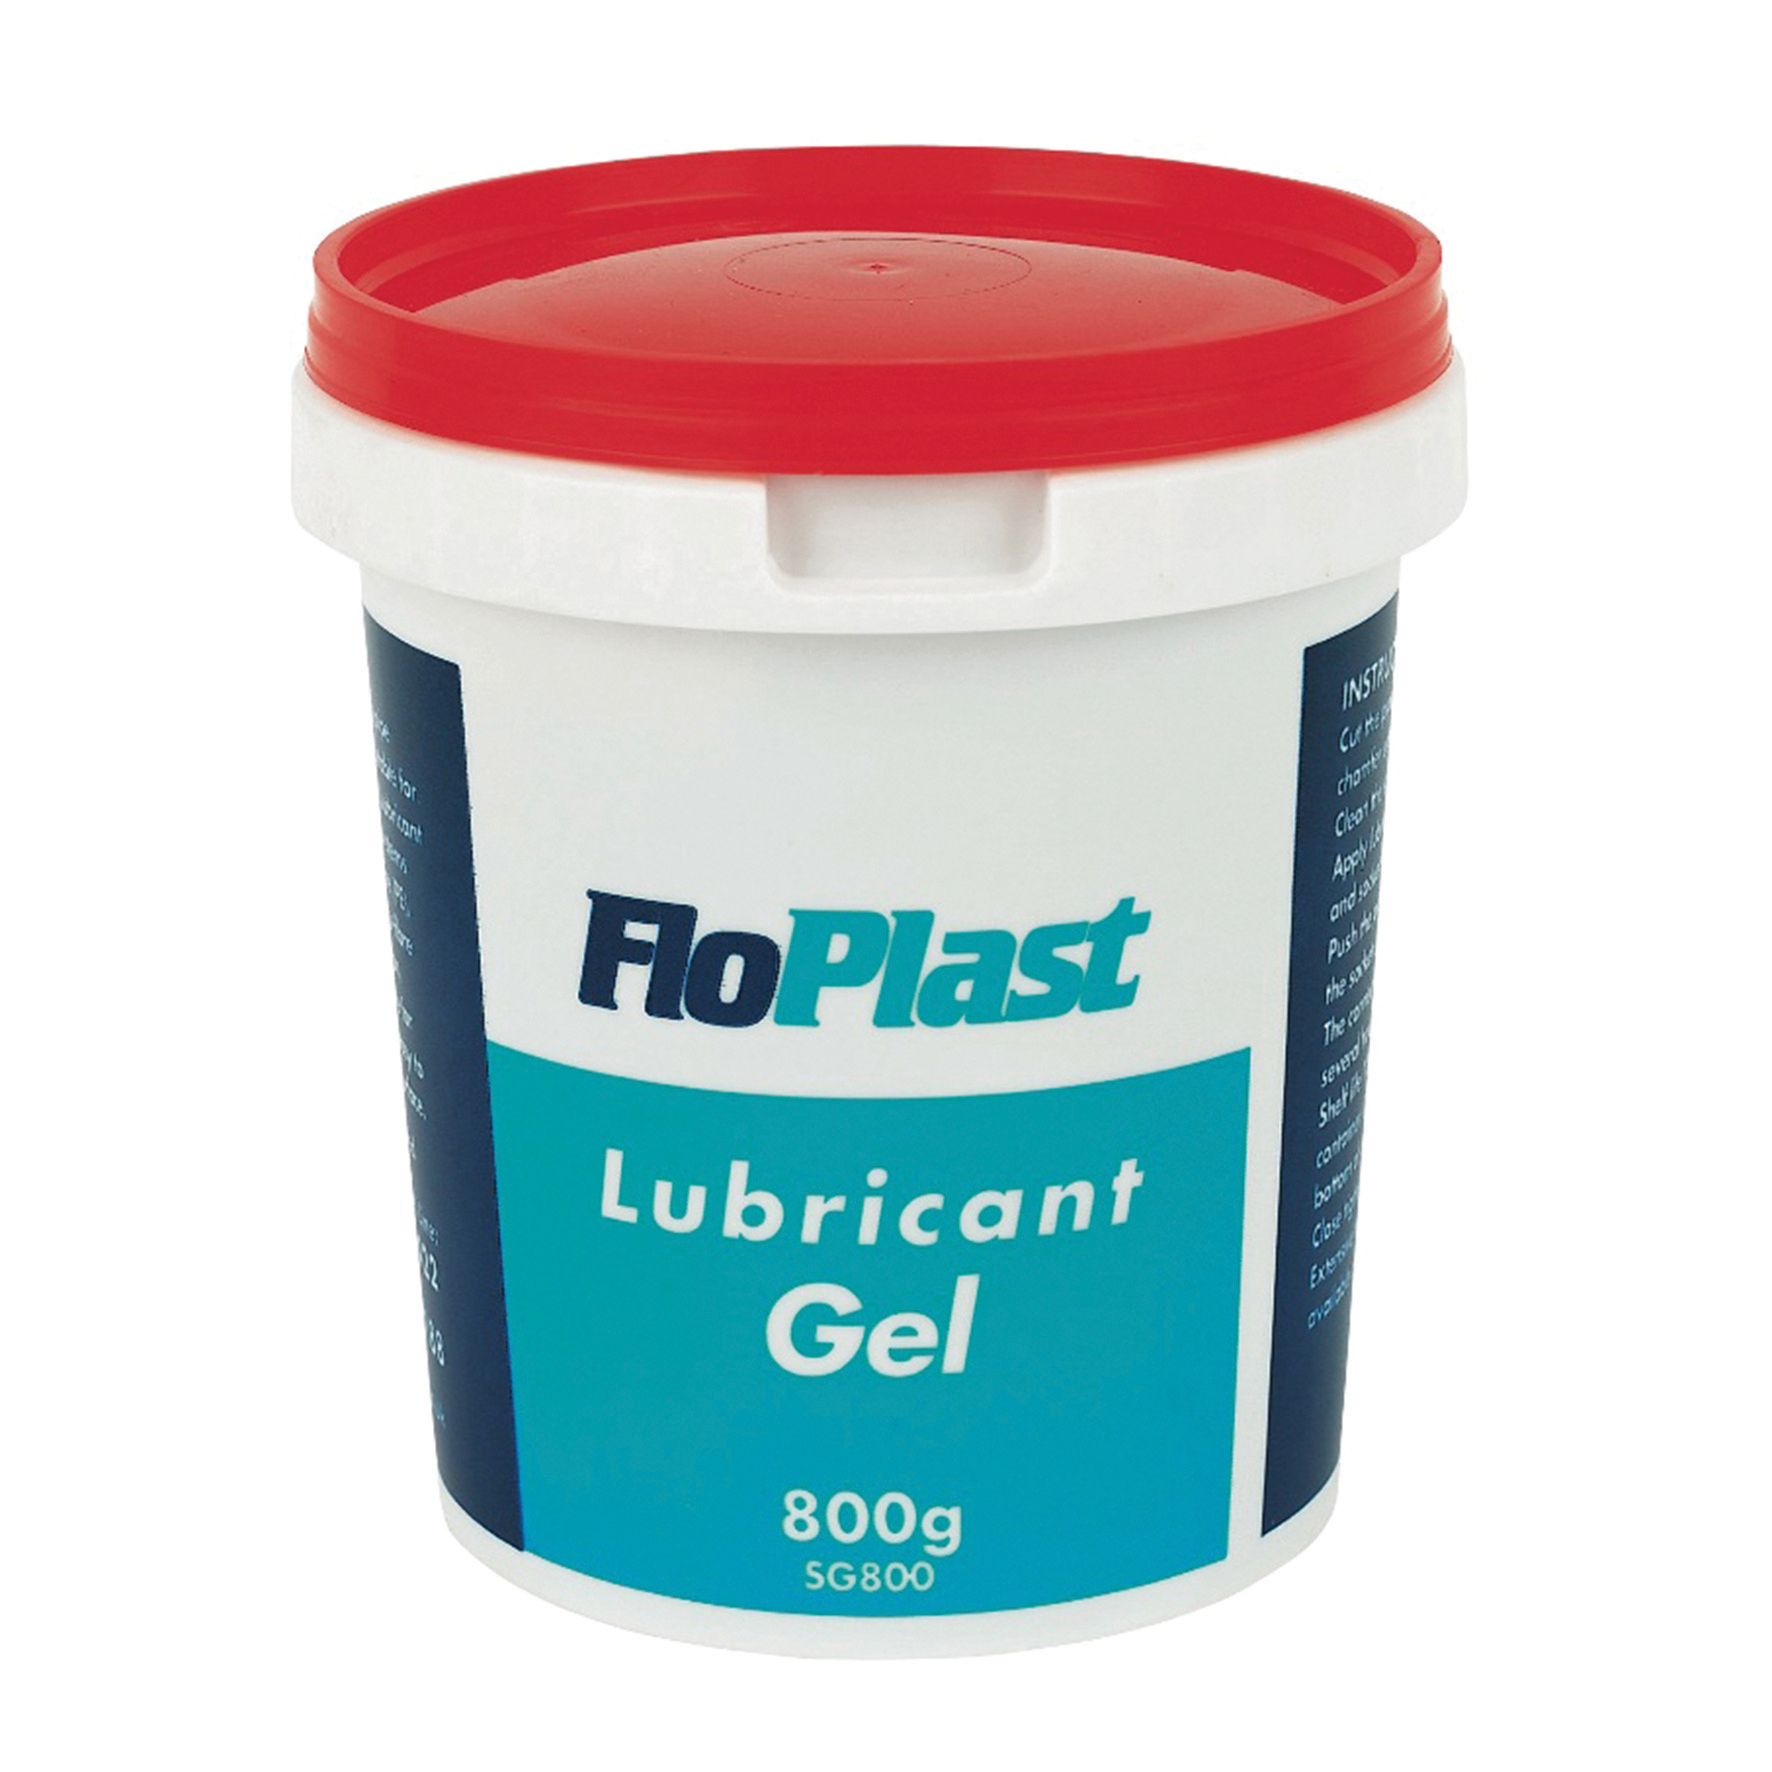 Image of FloPlast 800g Lubricant Gel - Blue